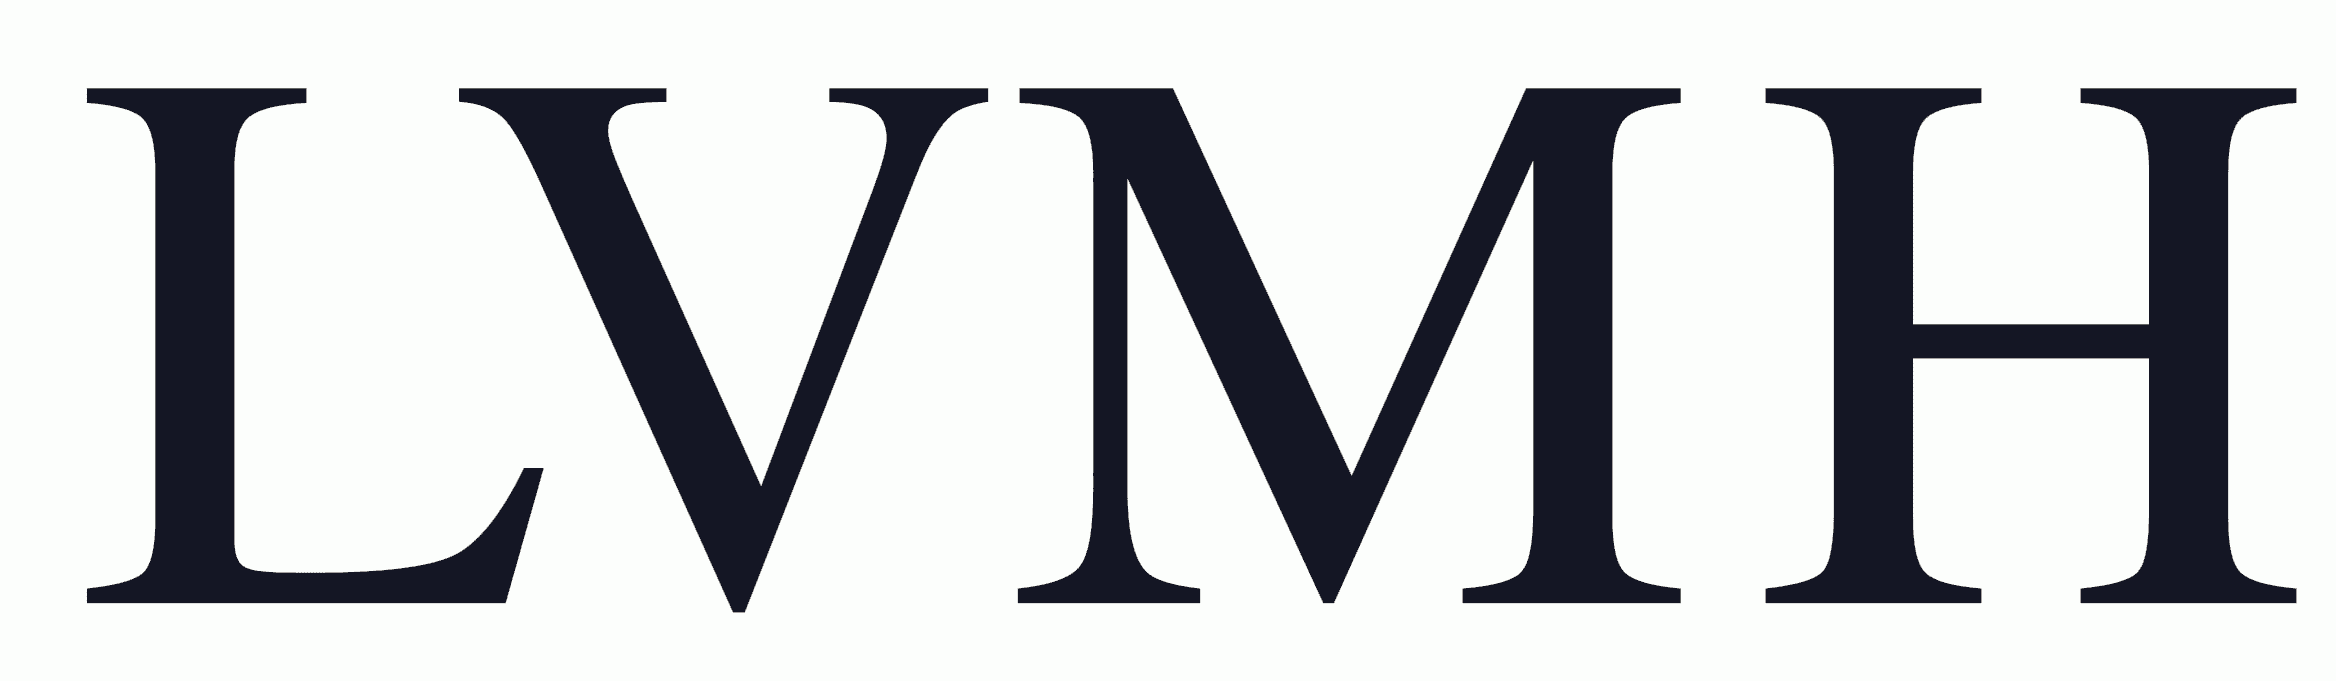 Idal - logo lvmh